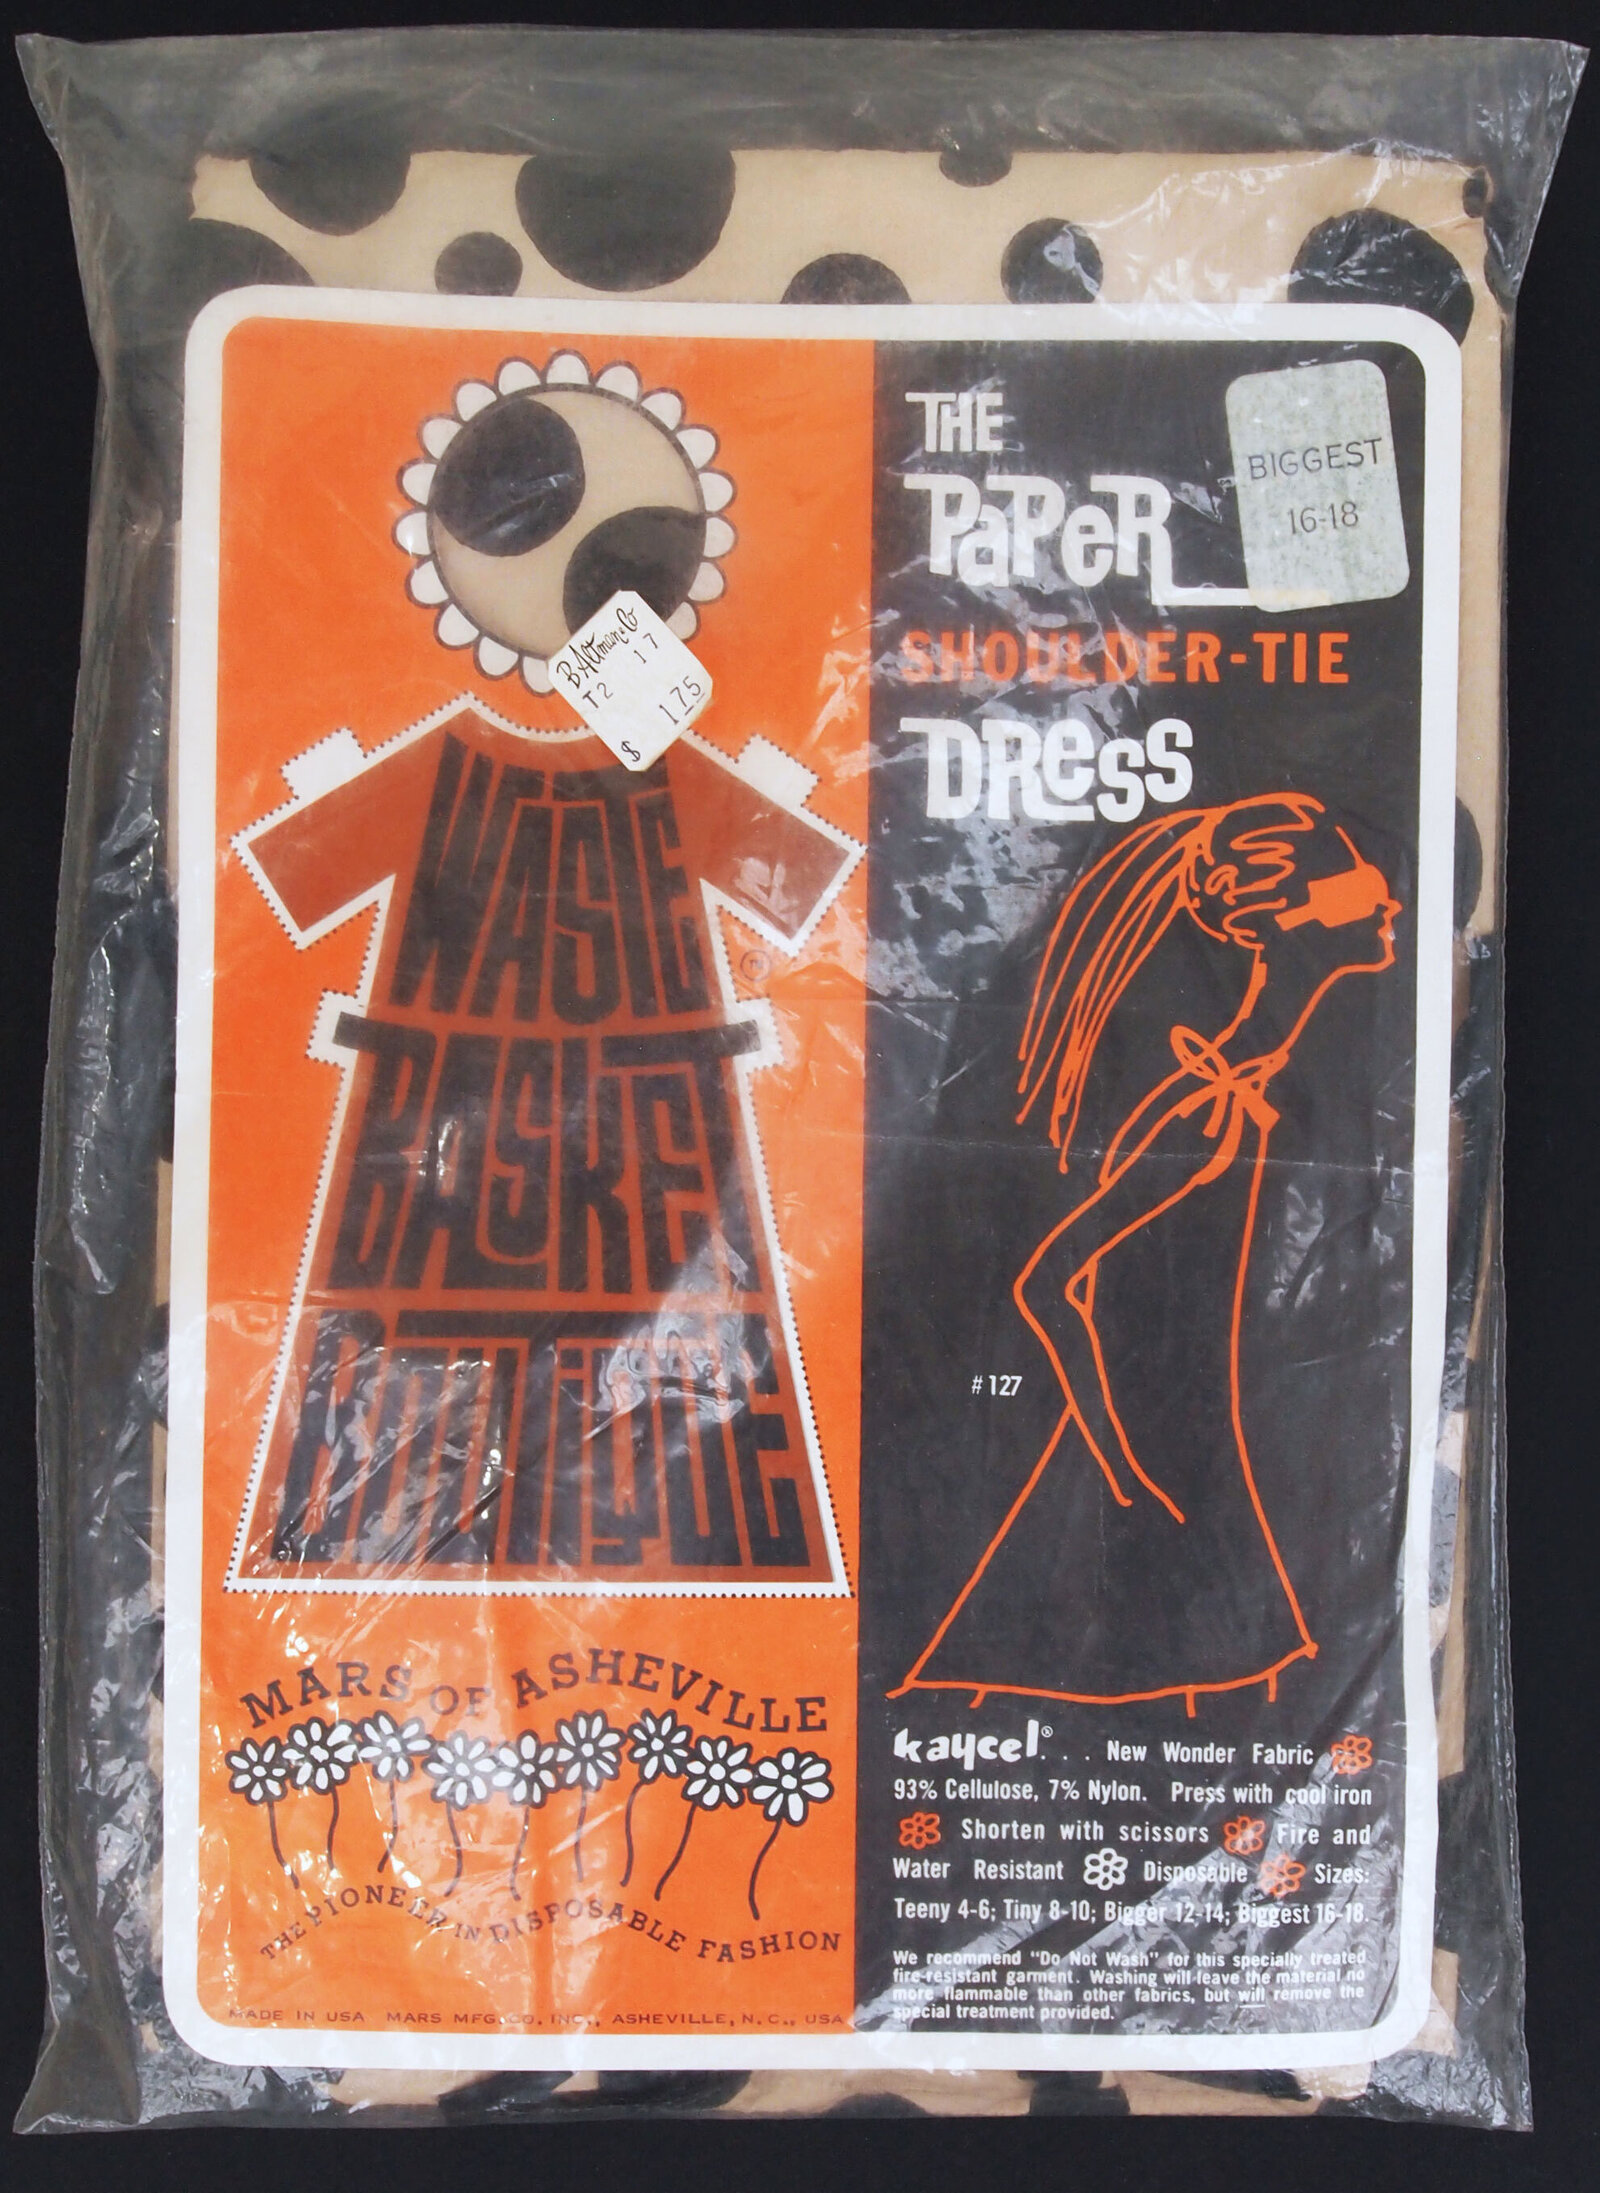 unused 1960s paper dress in its packaging - courtesy of denisebrain